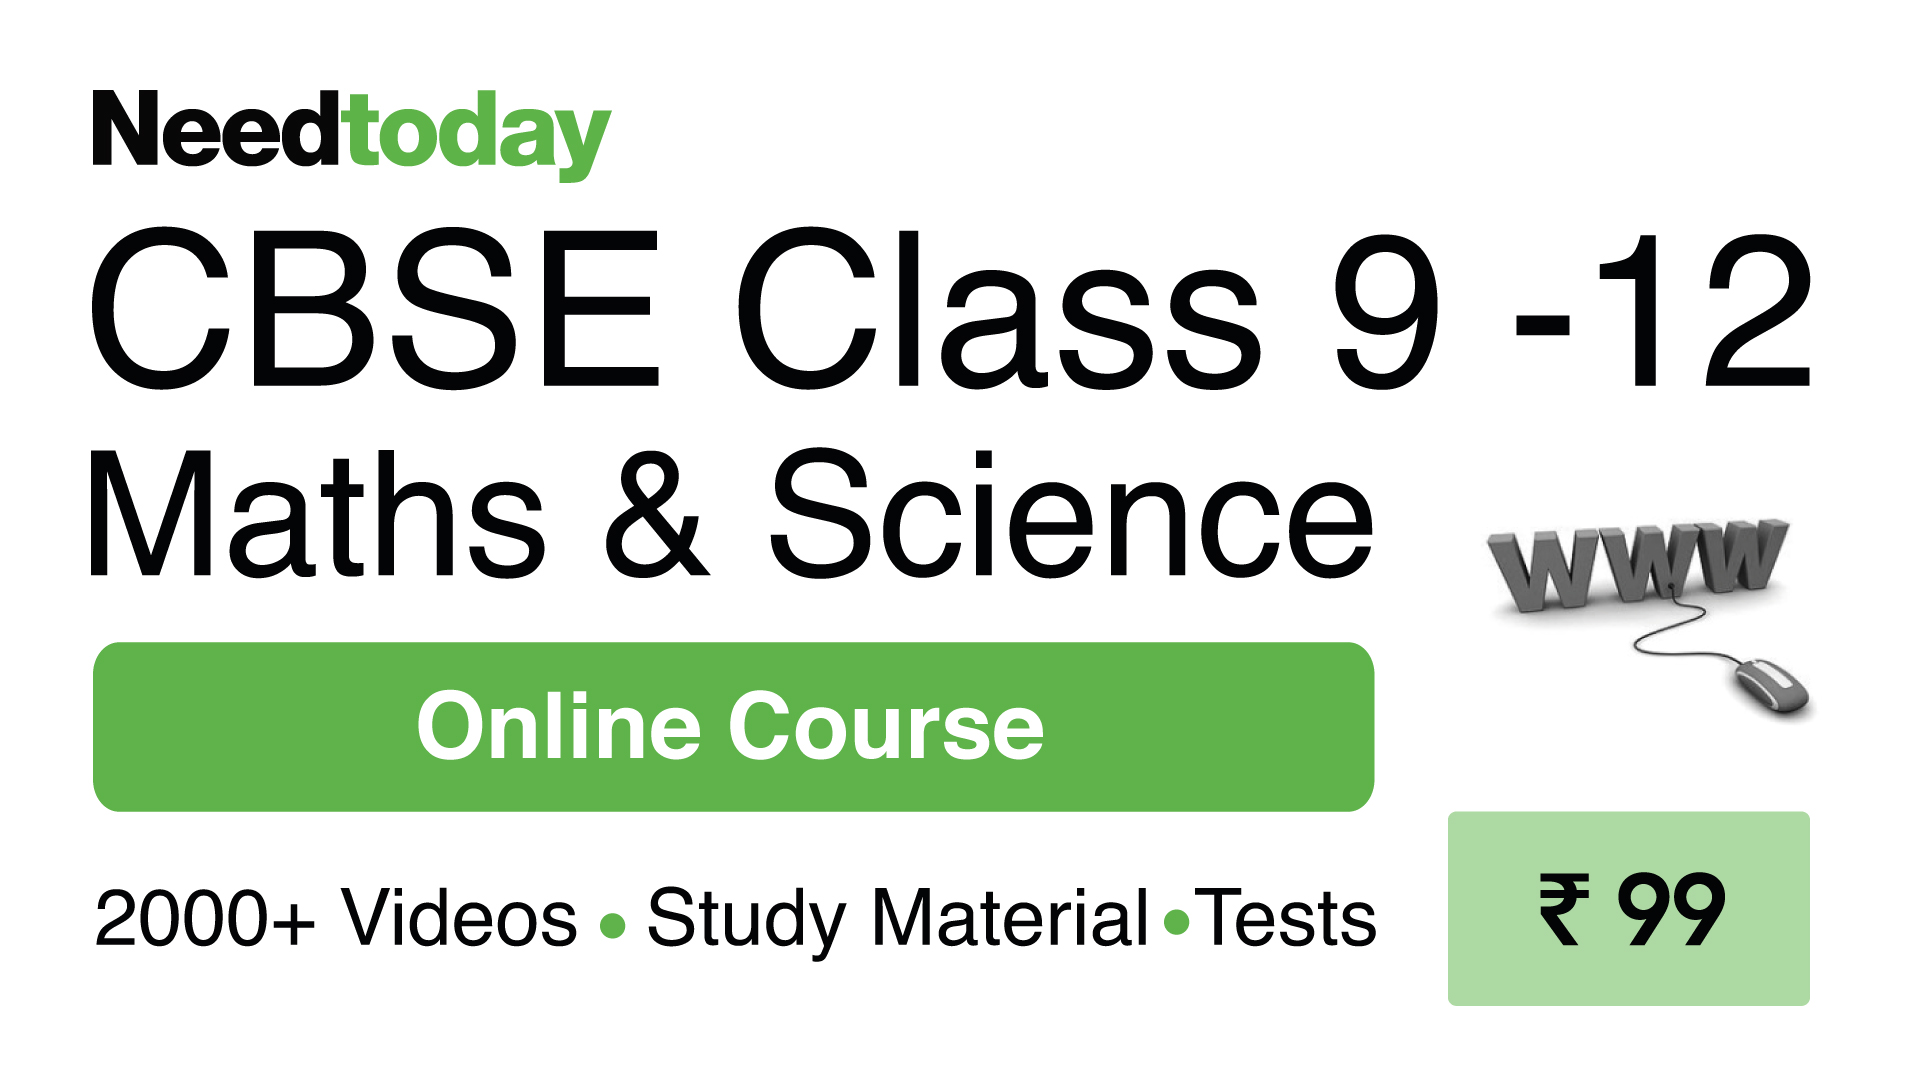 Needtoday CBSE Class 9 - 12 Maths & Science Online Course